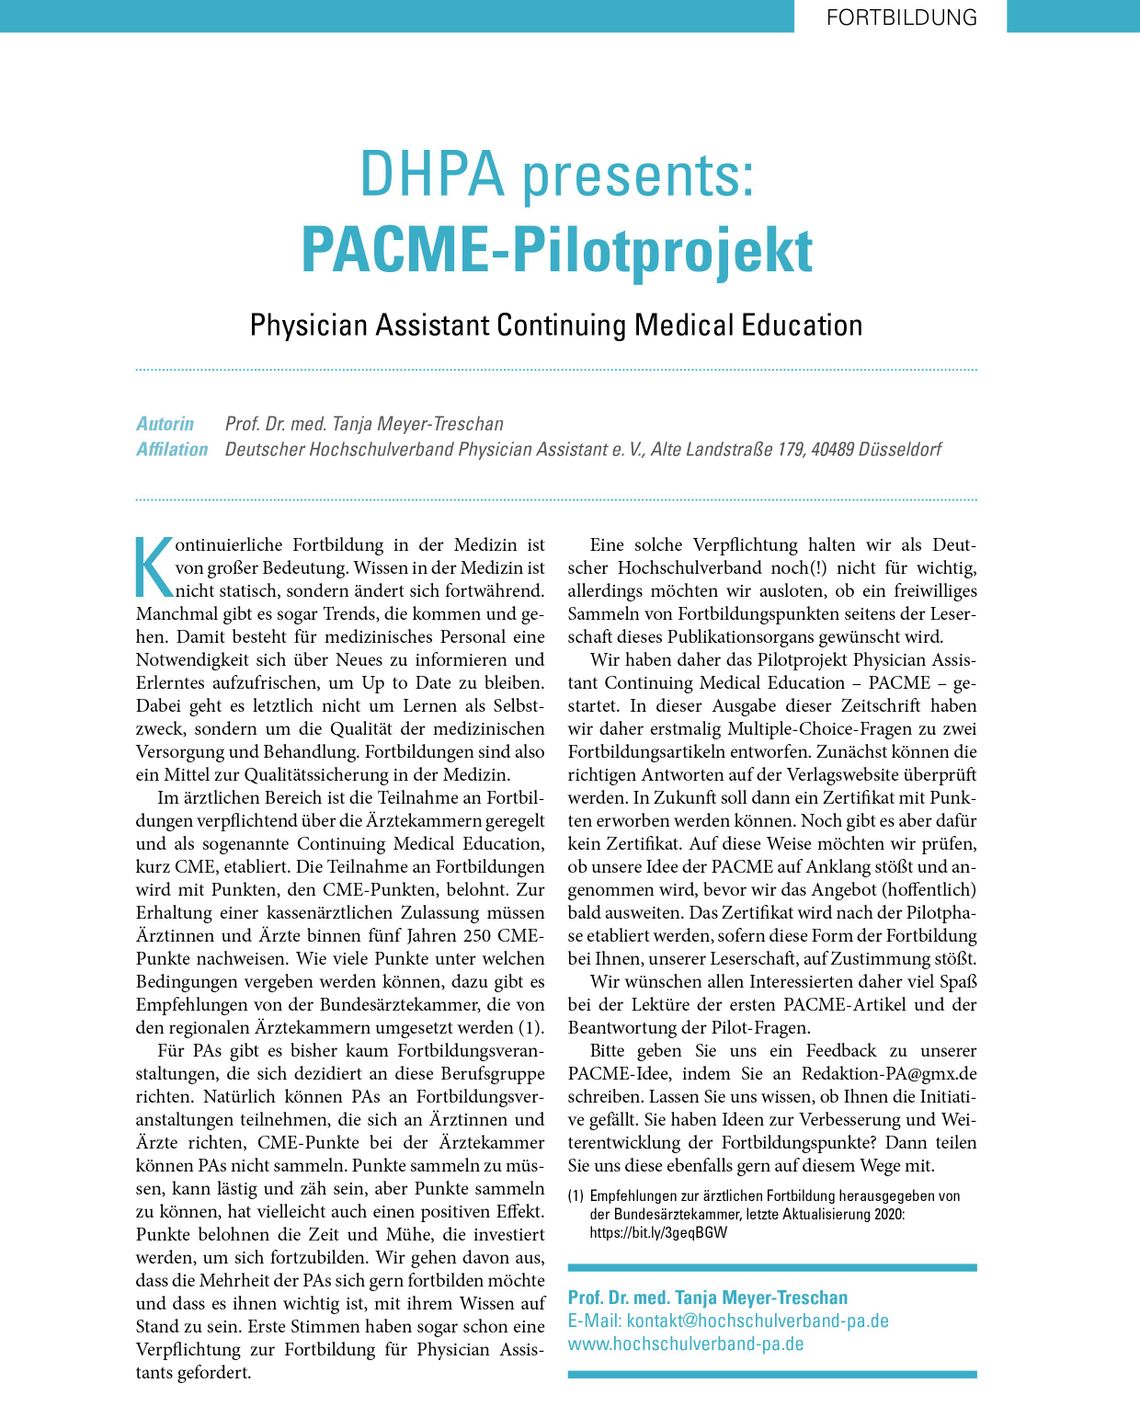 DHPA presents: PACME-Pilotprojekt